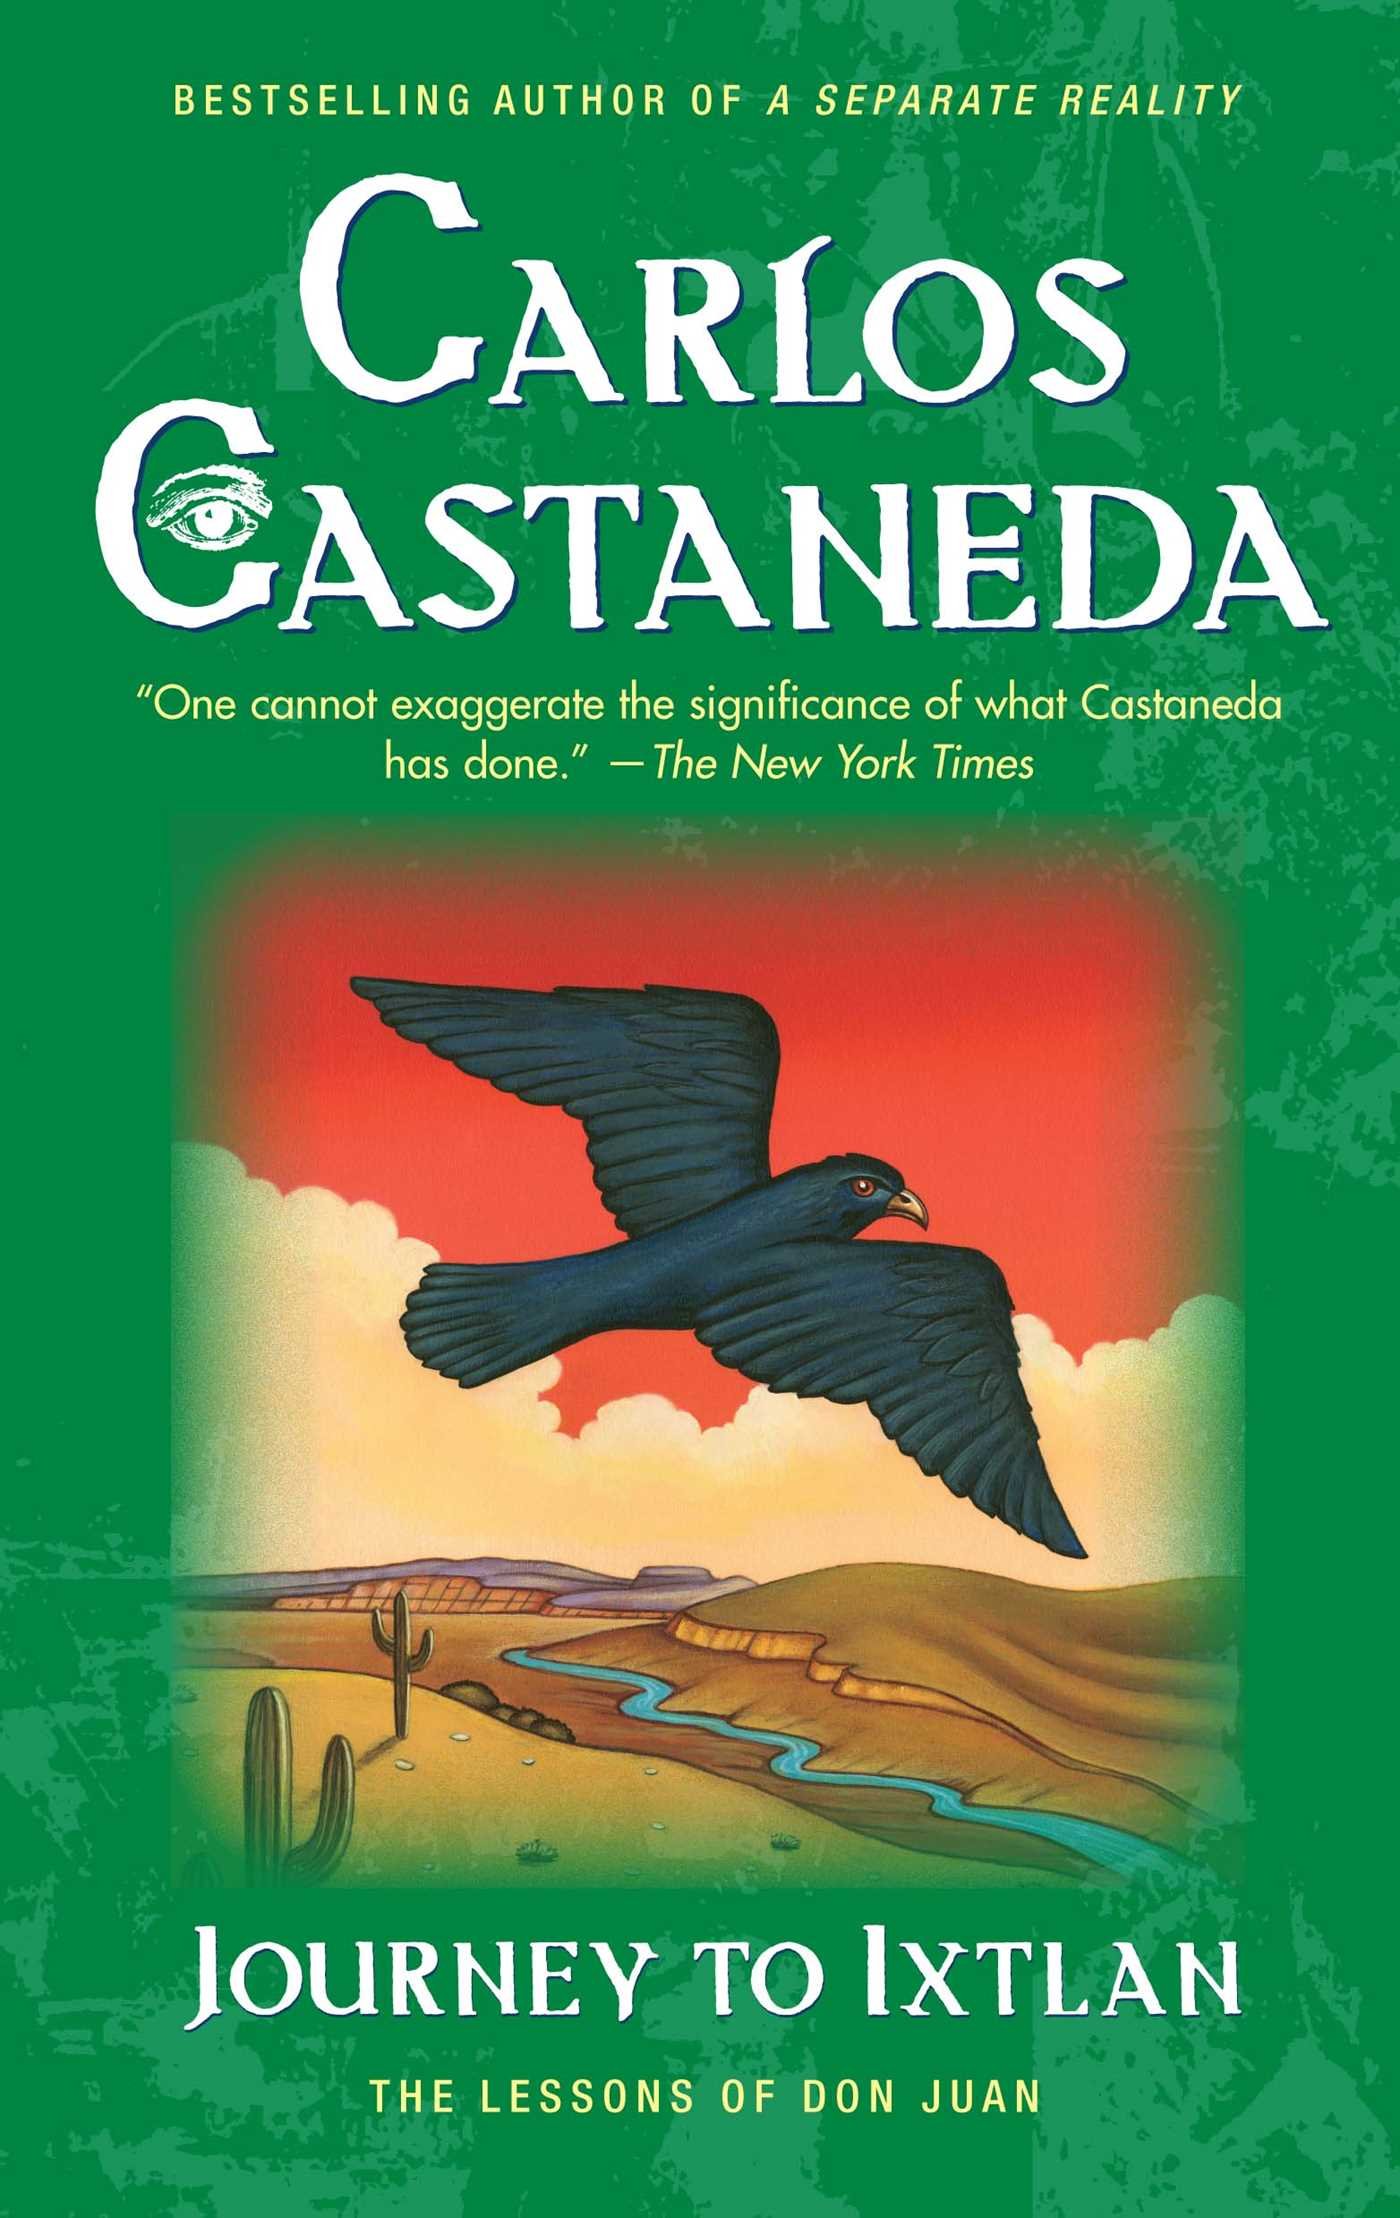 Book by Carlos Castaneda